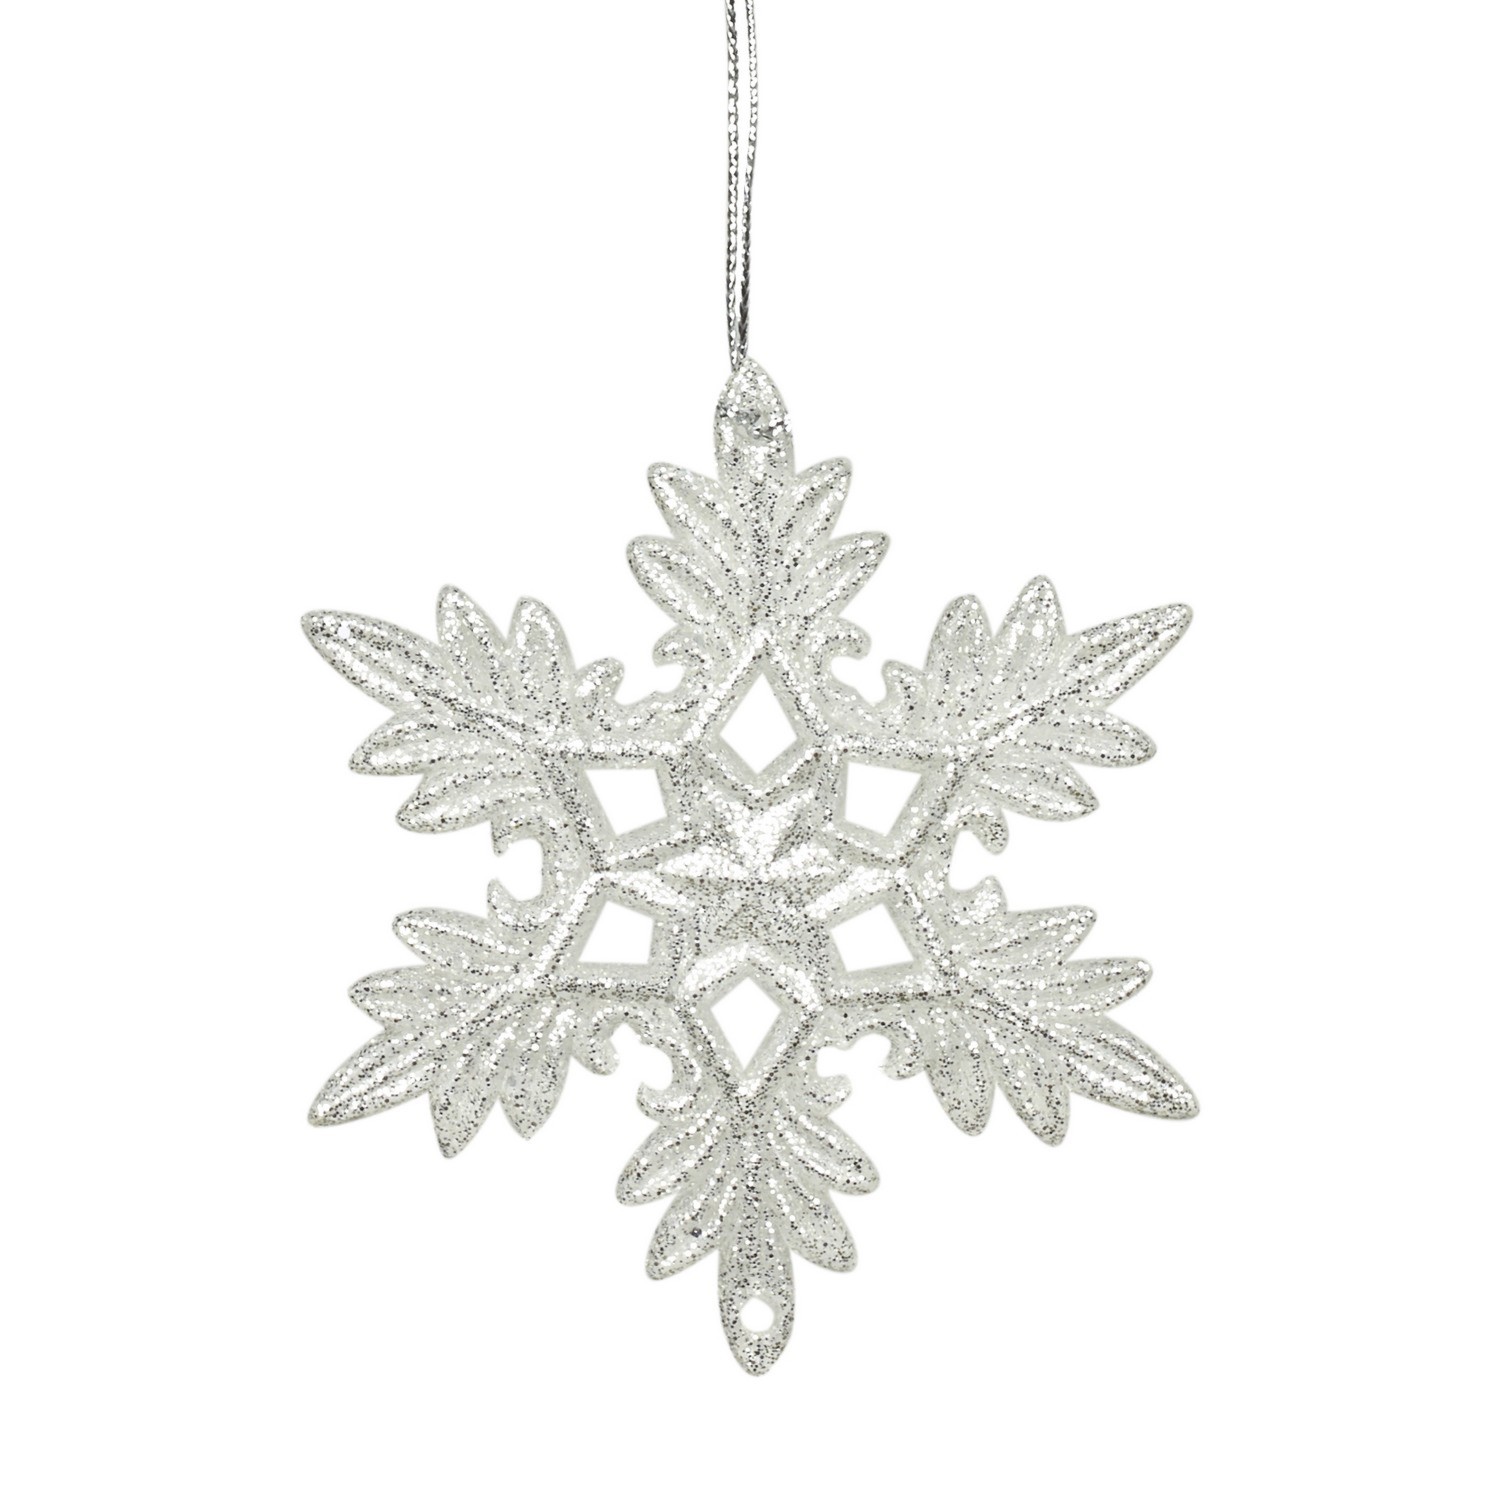 Snowflake Tree Decoration - Silver or White Image 1